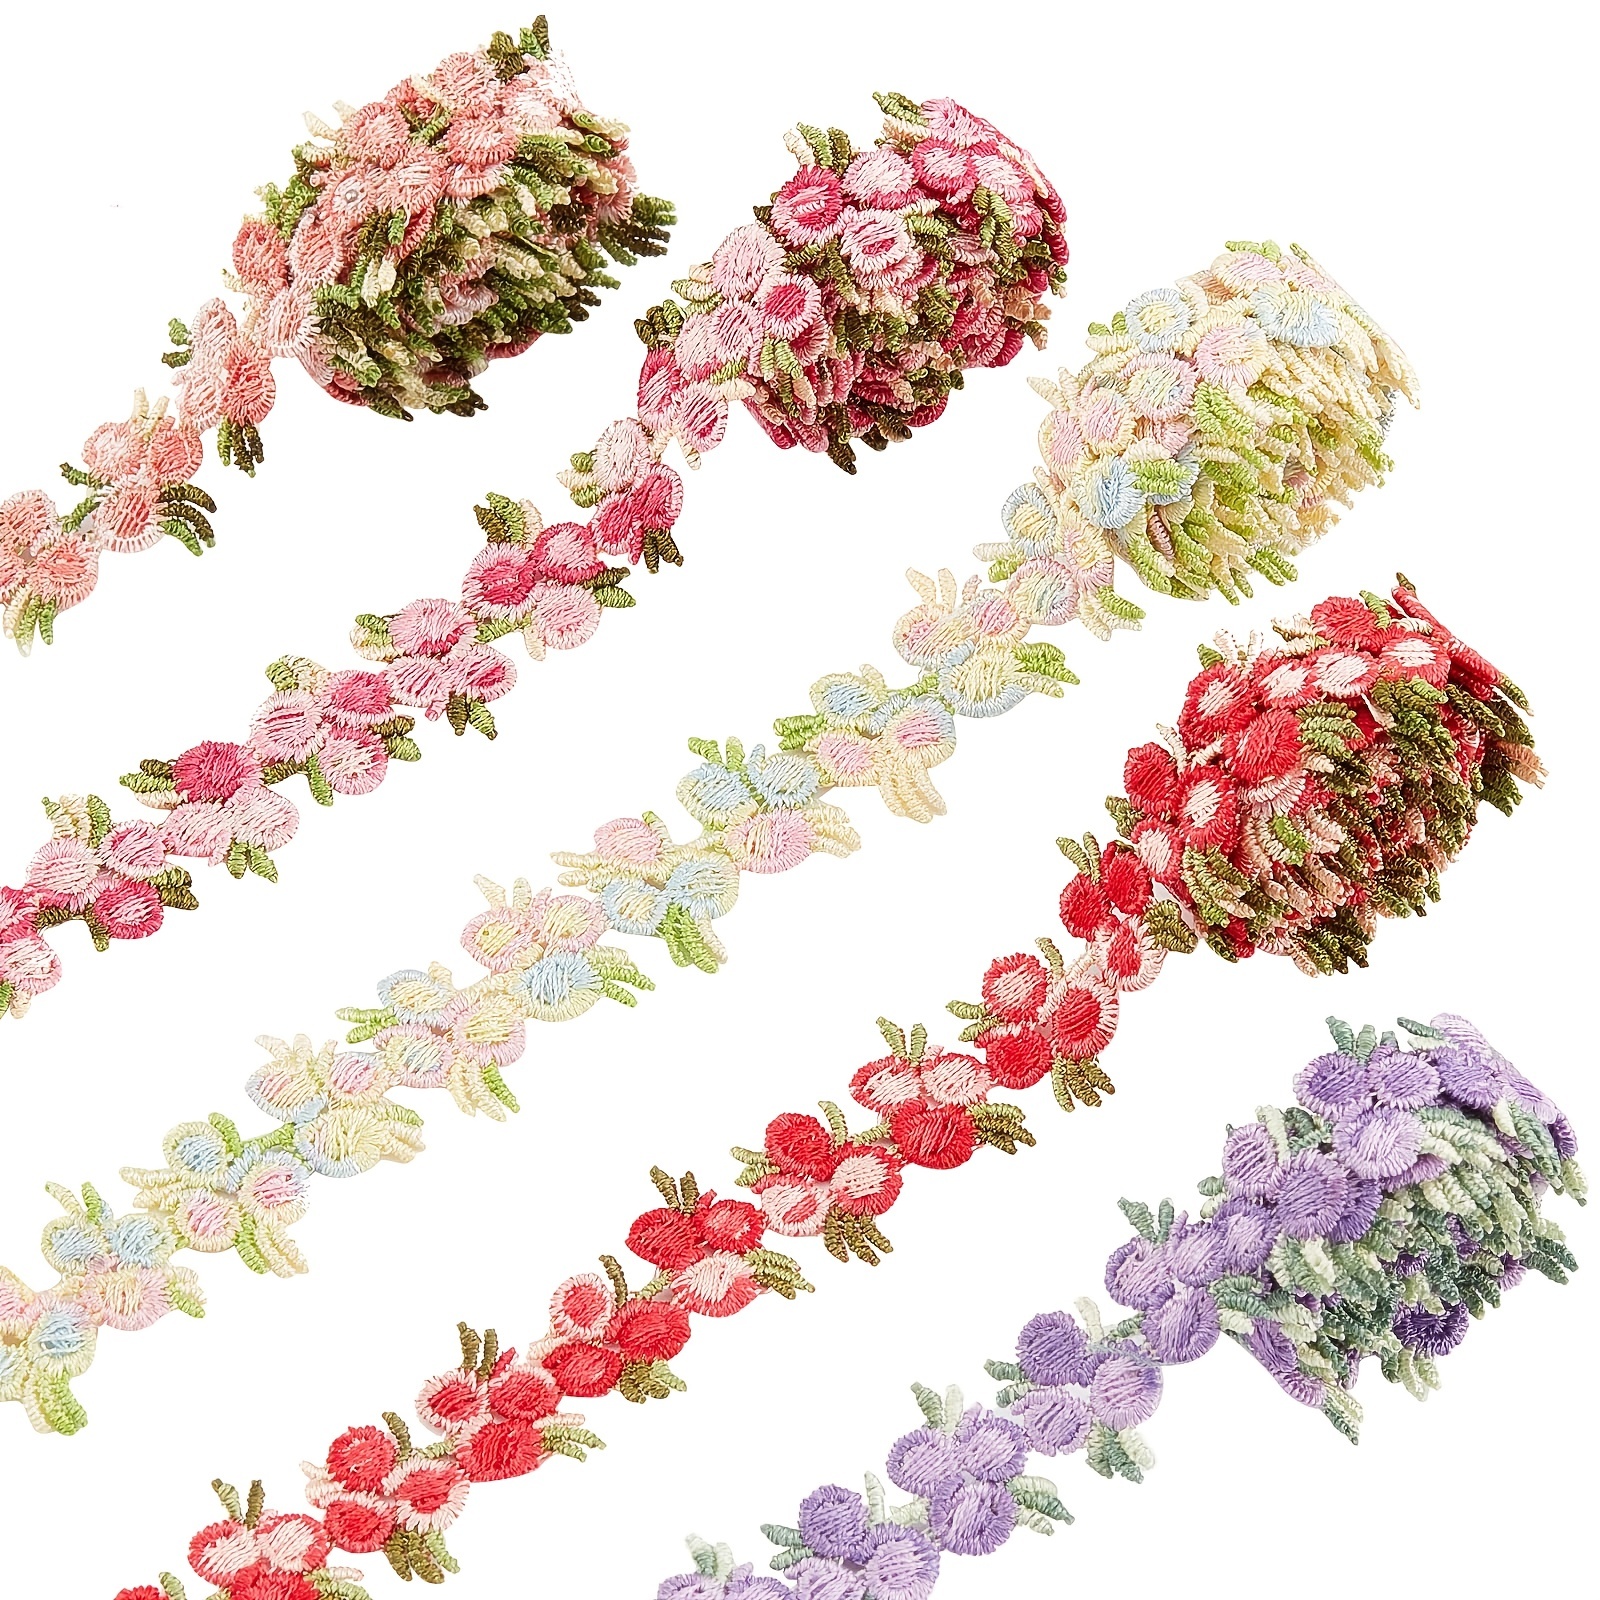 

1pc Flower Trim Ribbon Cherry Color Flower Diy Lace Applique Sewing Craft Lace Edge Trim For Wedding Dresses Embellishment Diy Party Decor Clothes (91.4cm/36in)